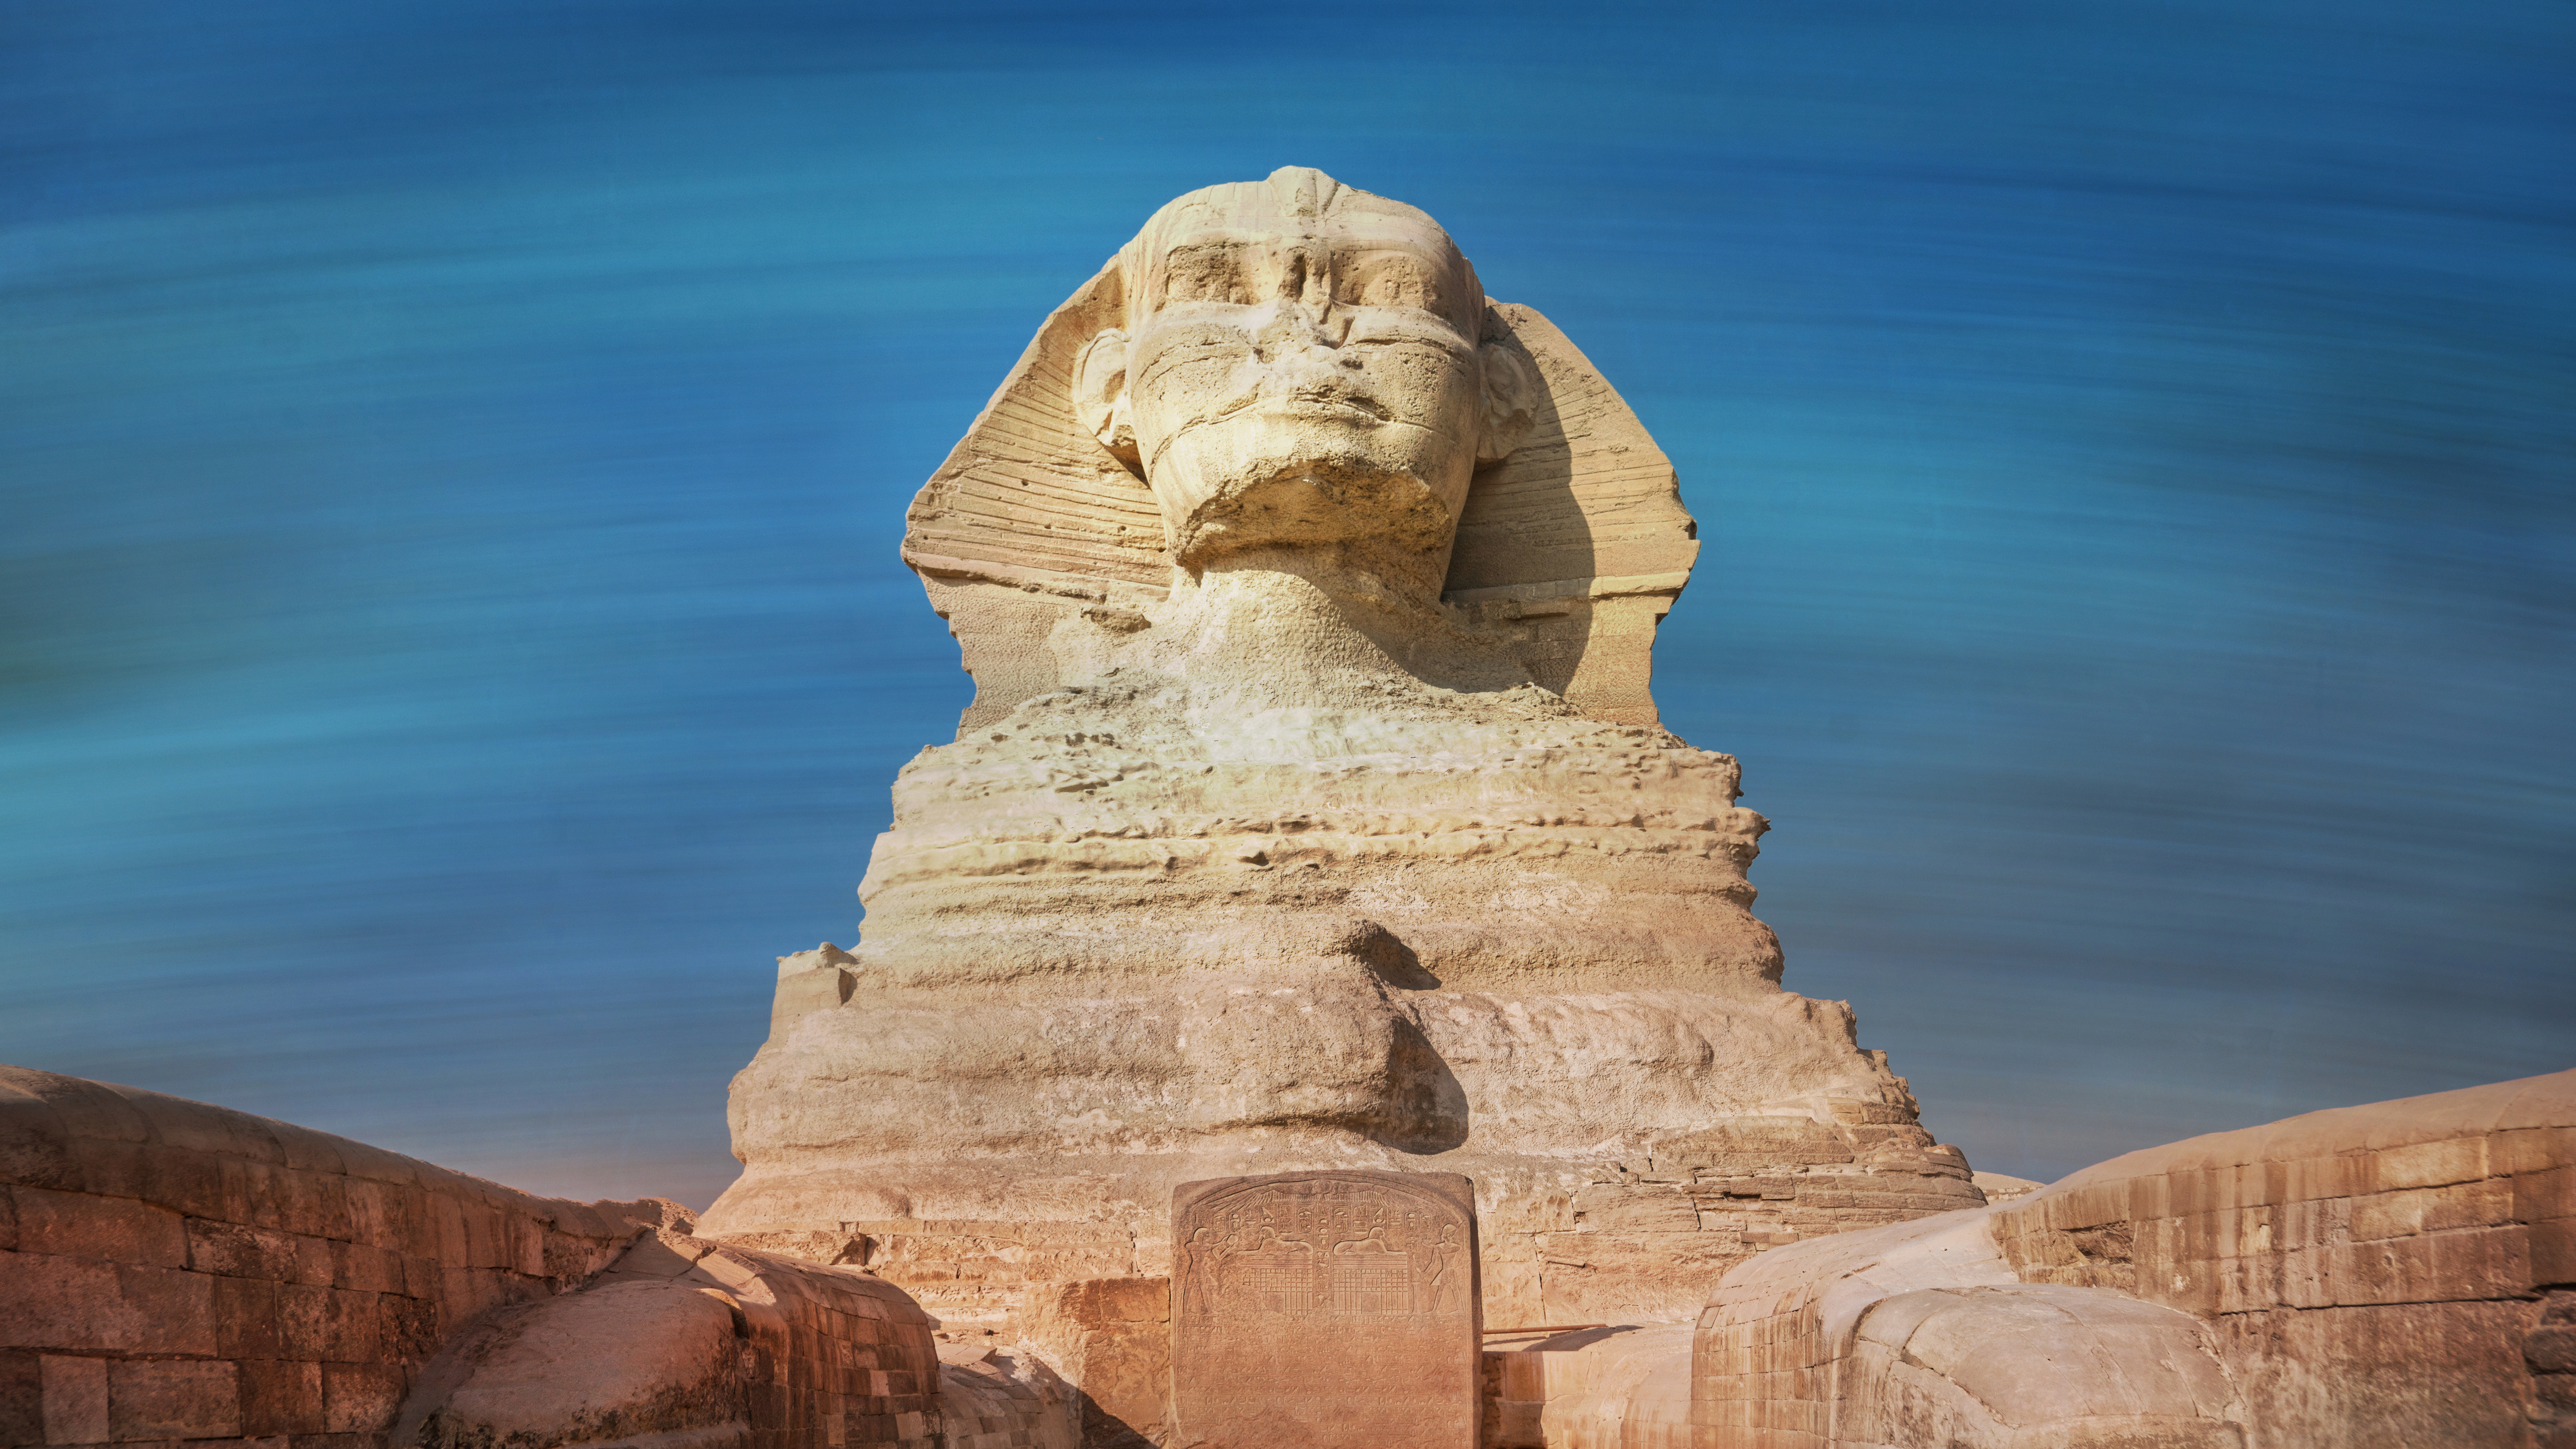 General 7680x4320 Trey Ratcliff photography Egypt Cairo sphynx Ancient Egypt landmark World Heritage Site Africa